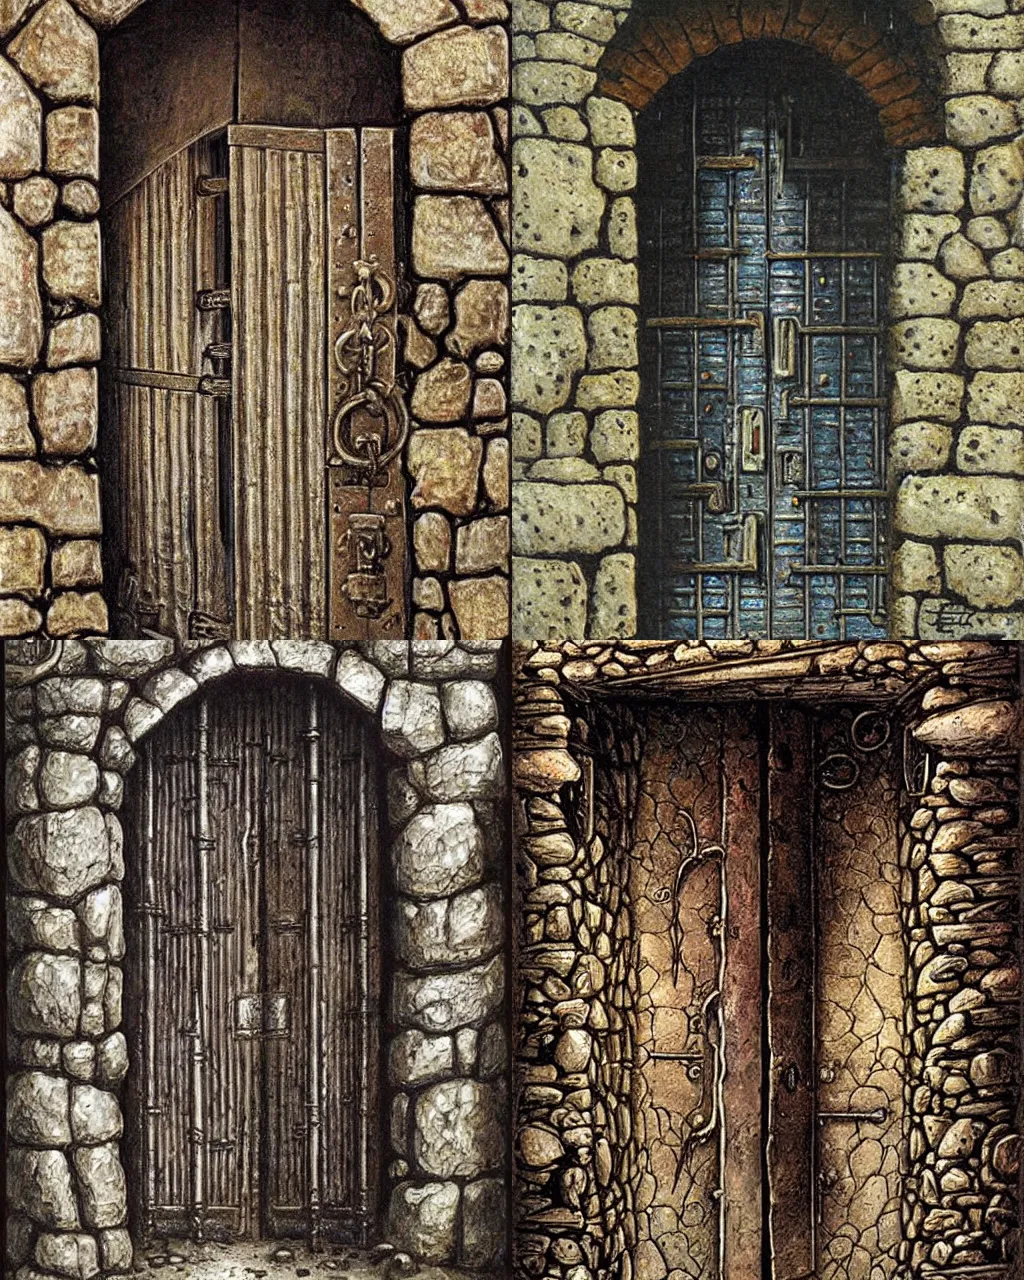 Prompt: Old metal door in a dungeon, rocks and metal, jeff easley,